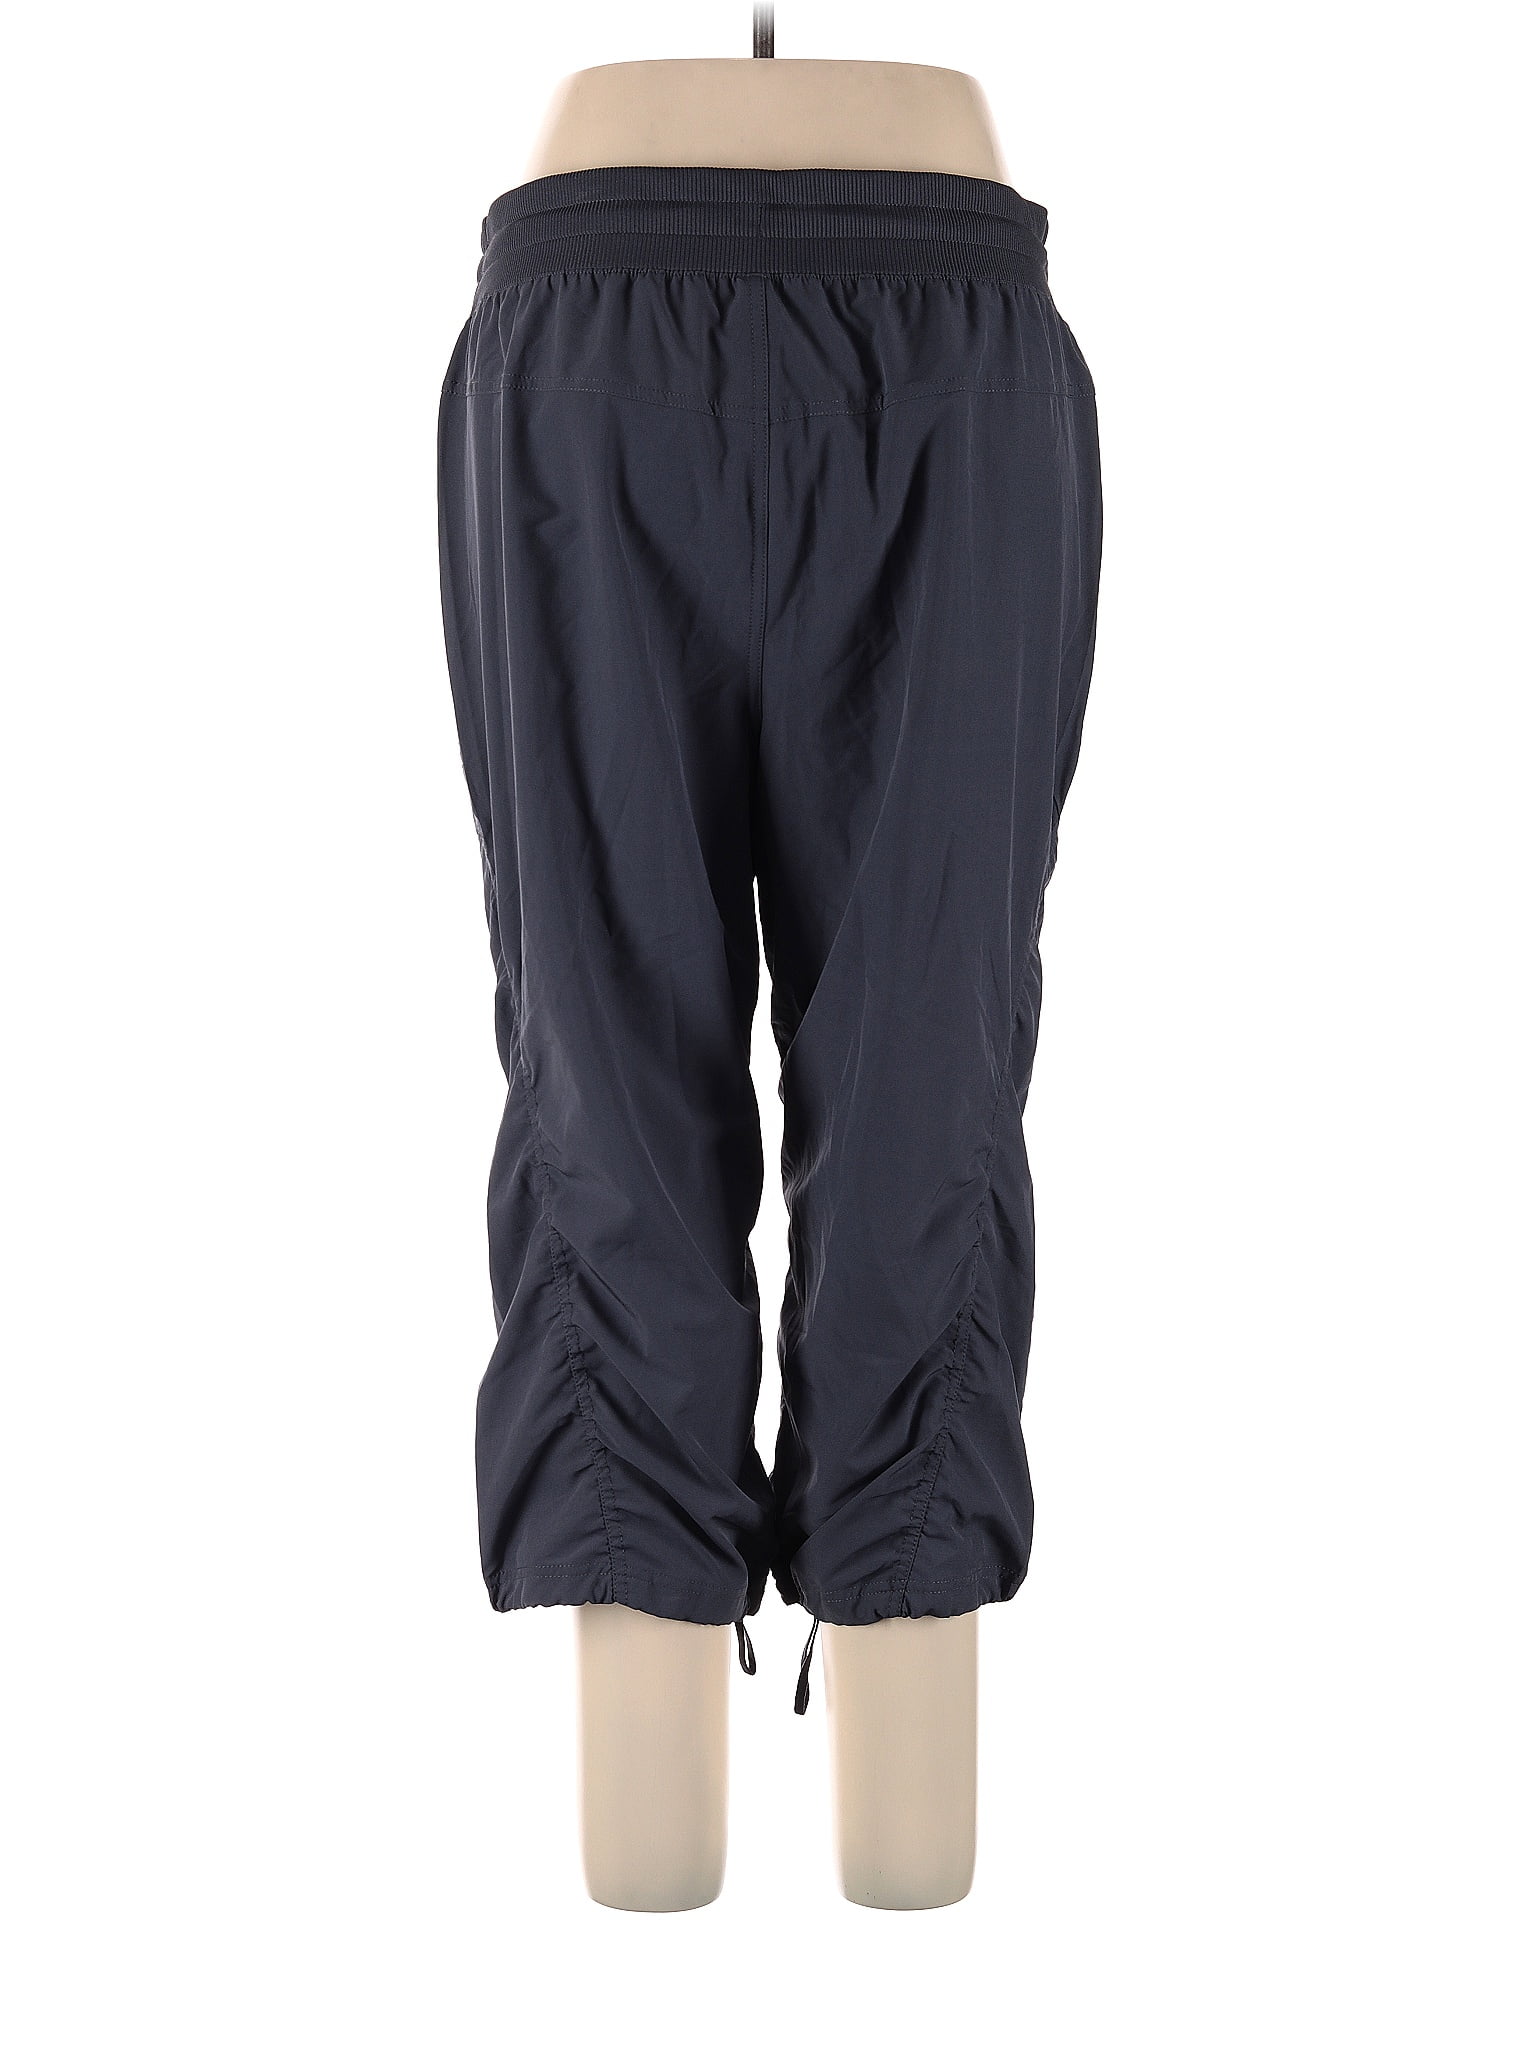 RBX Solid Blue Active Pants Size XL - 66% off